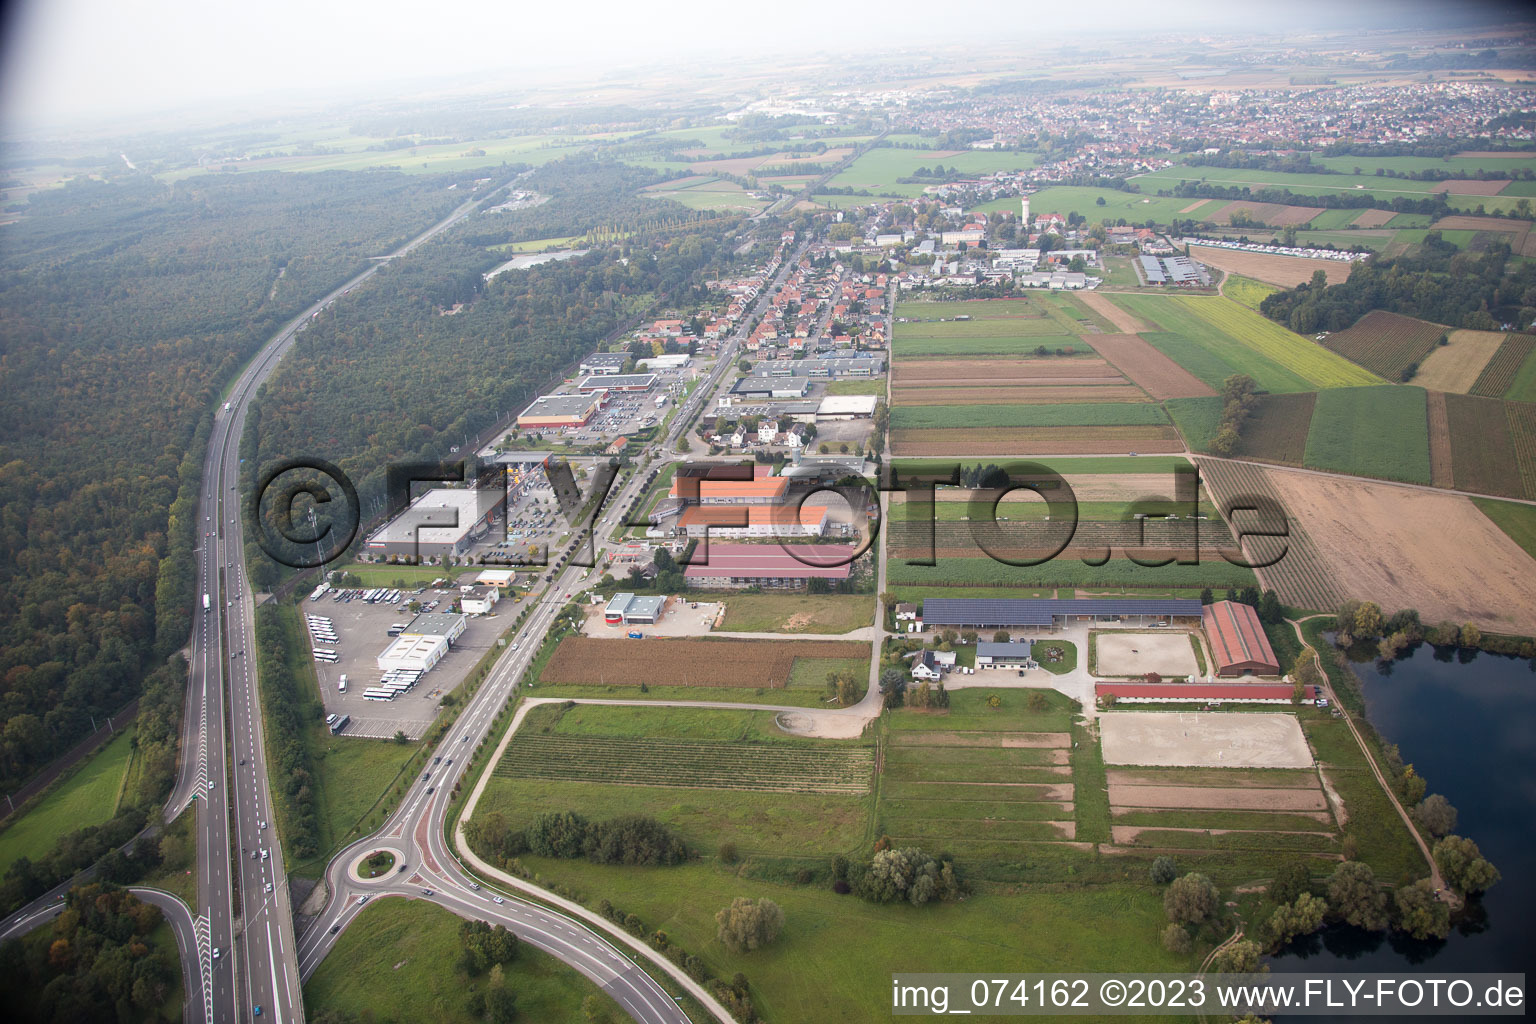 Luftbild von Brumath, Stephansfeld im Bundesland Bas-Rhin, Frankreich